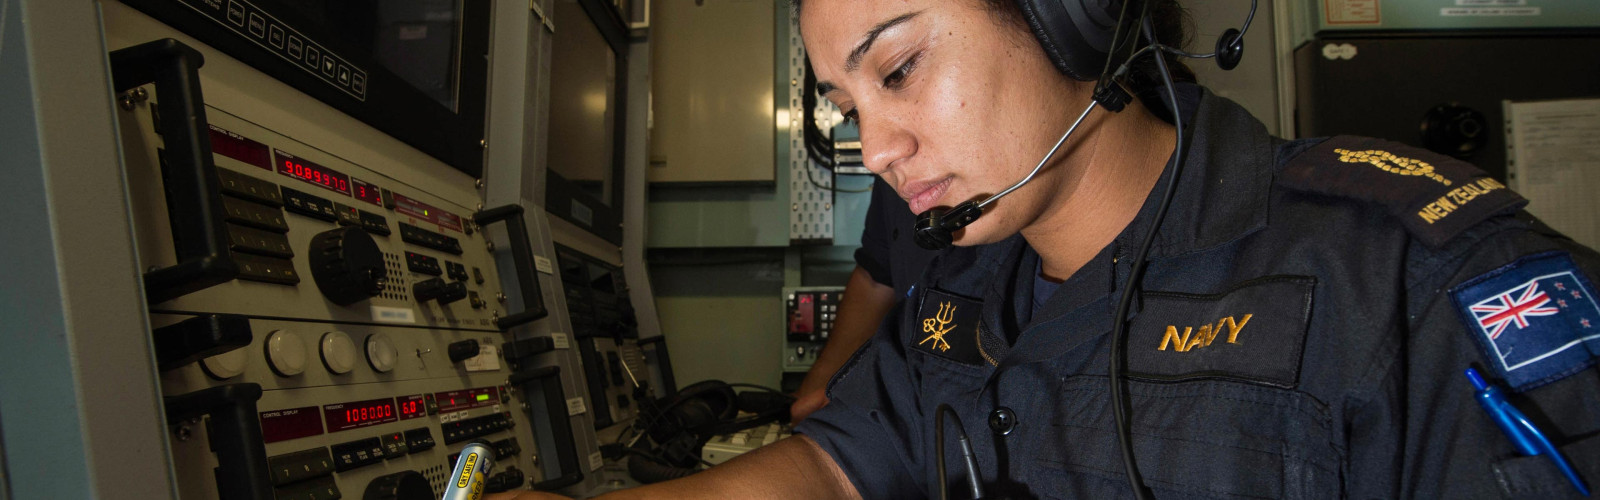 navy communications technician full width